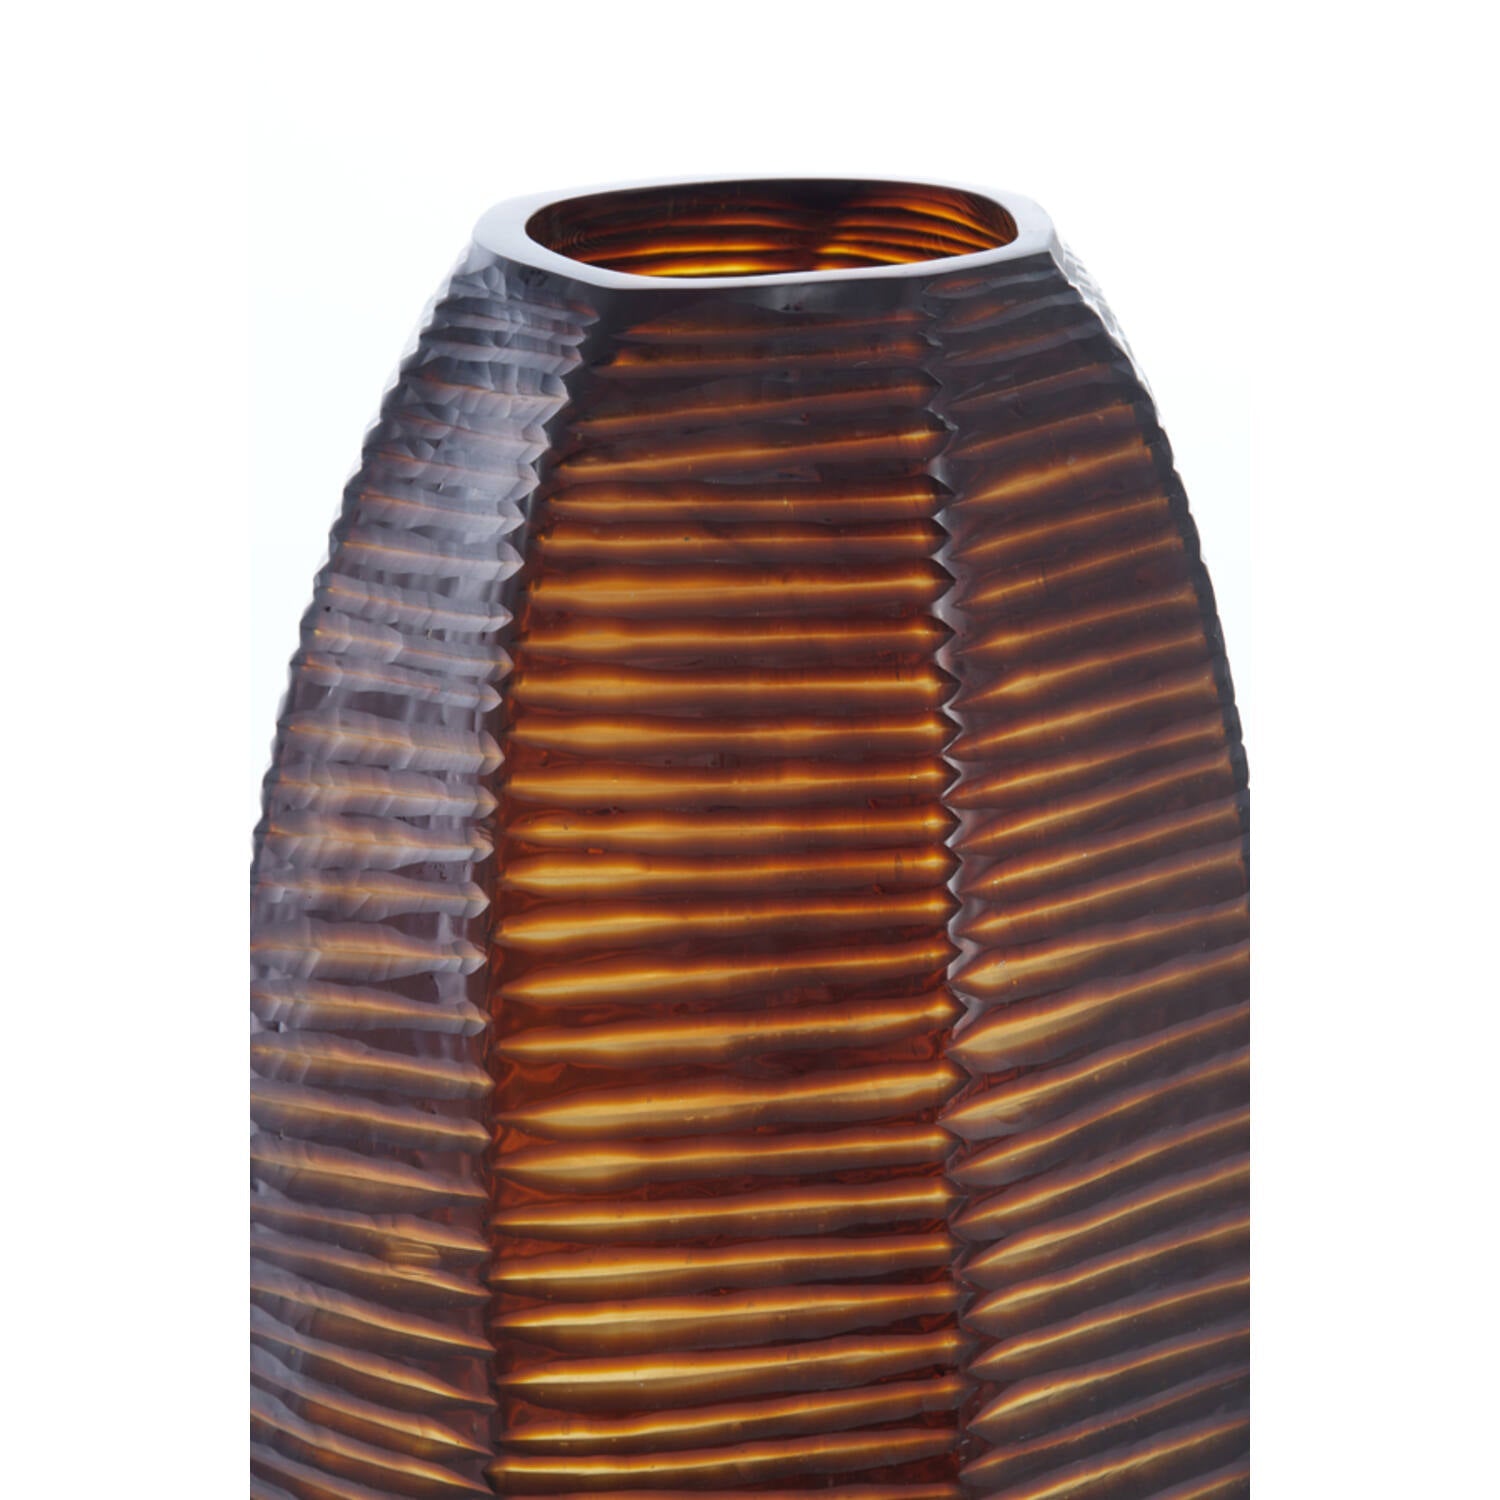 Maeva XL Vase - Brown Glass Finish